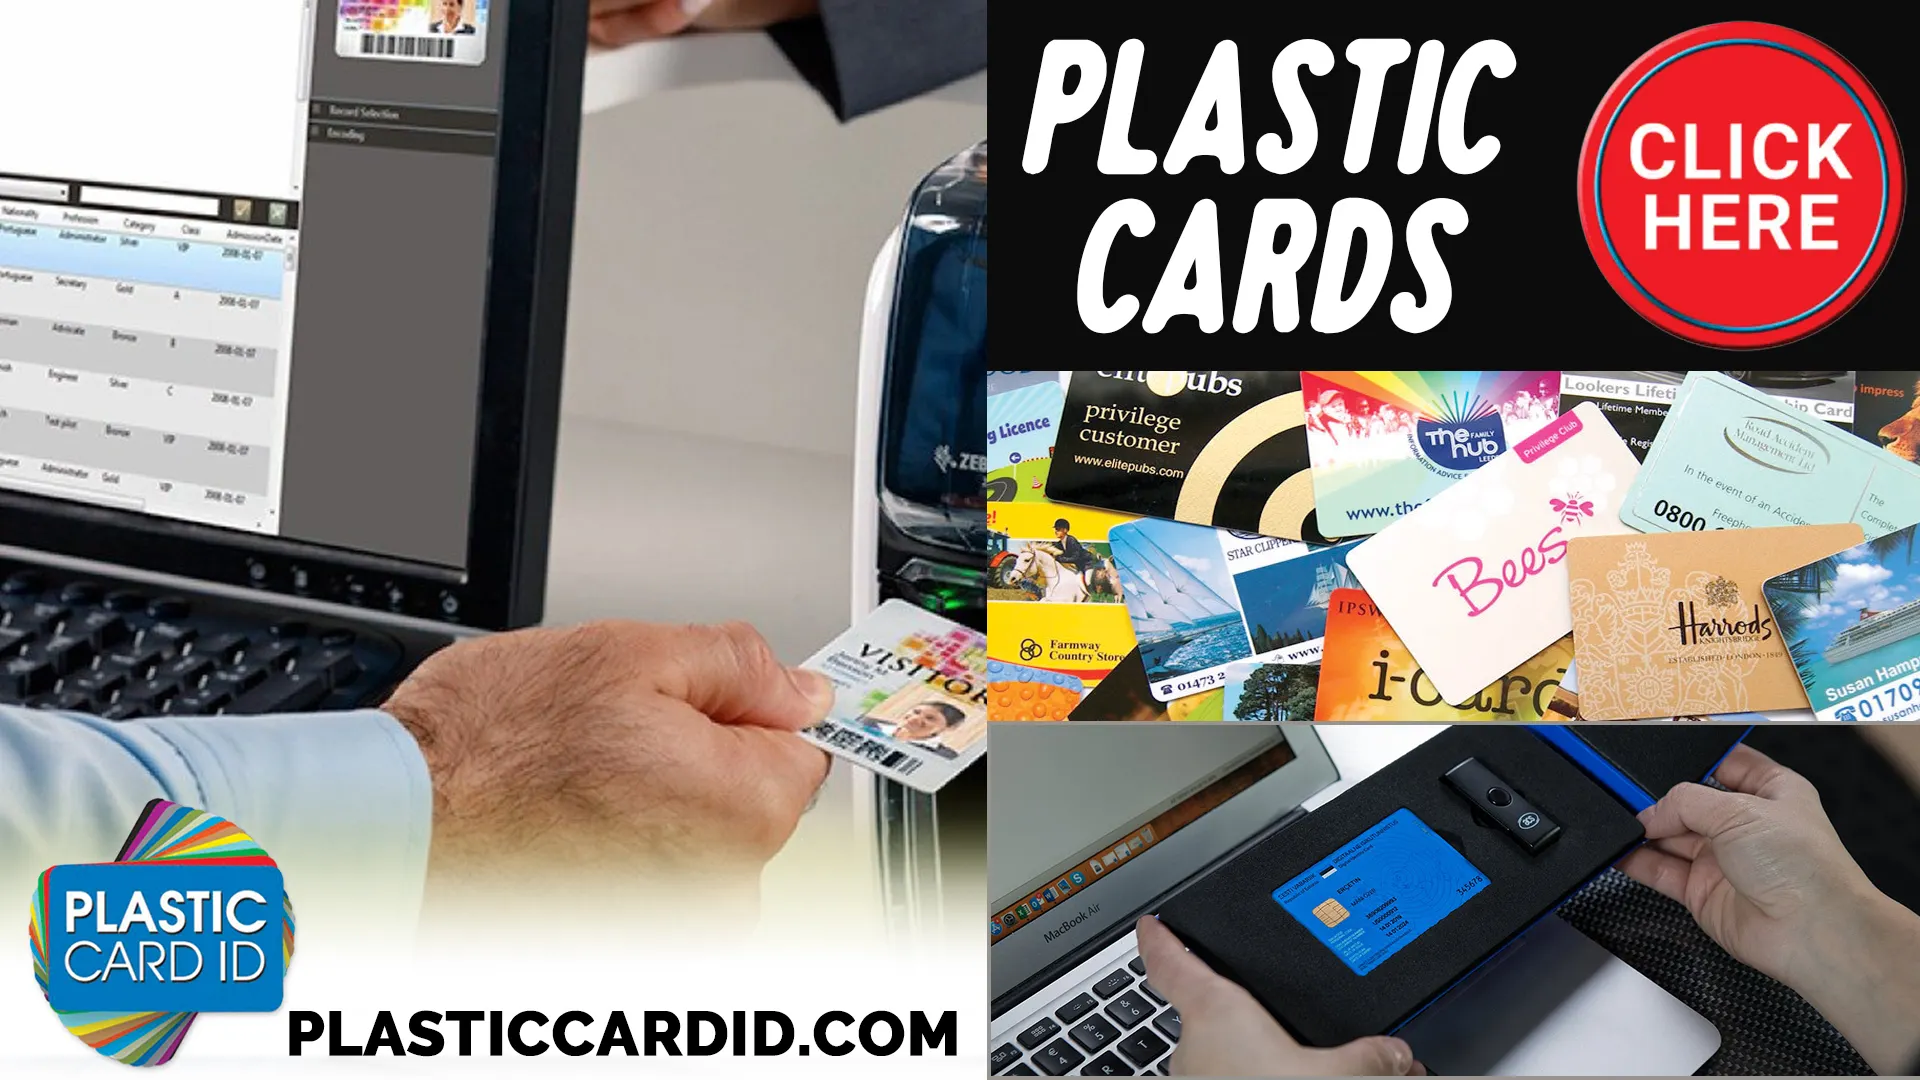 The Art of Communication Through Plastic Card Design